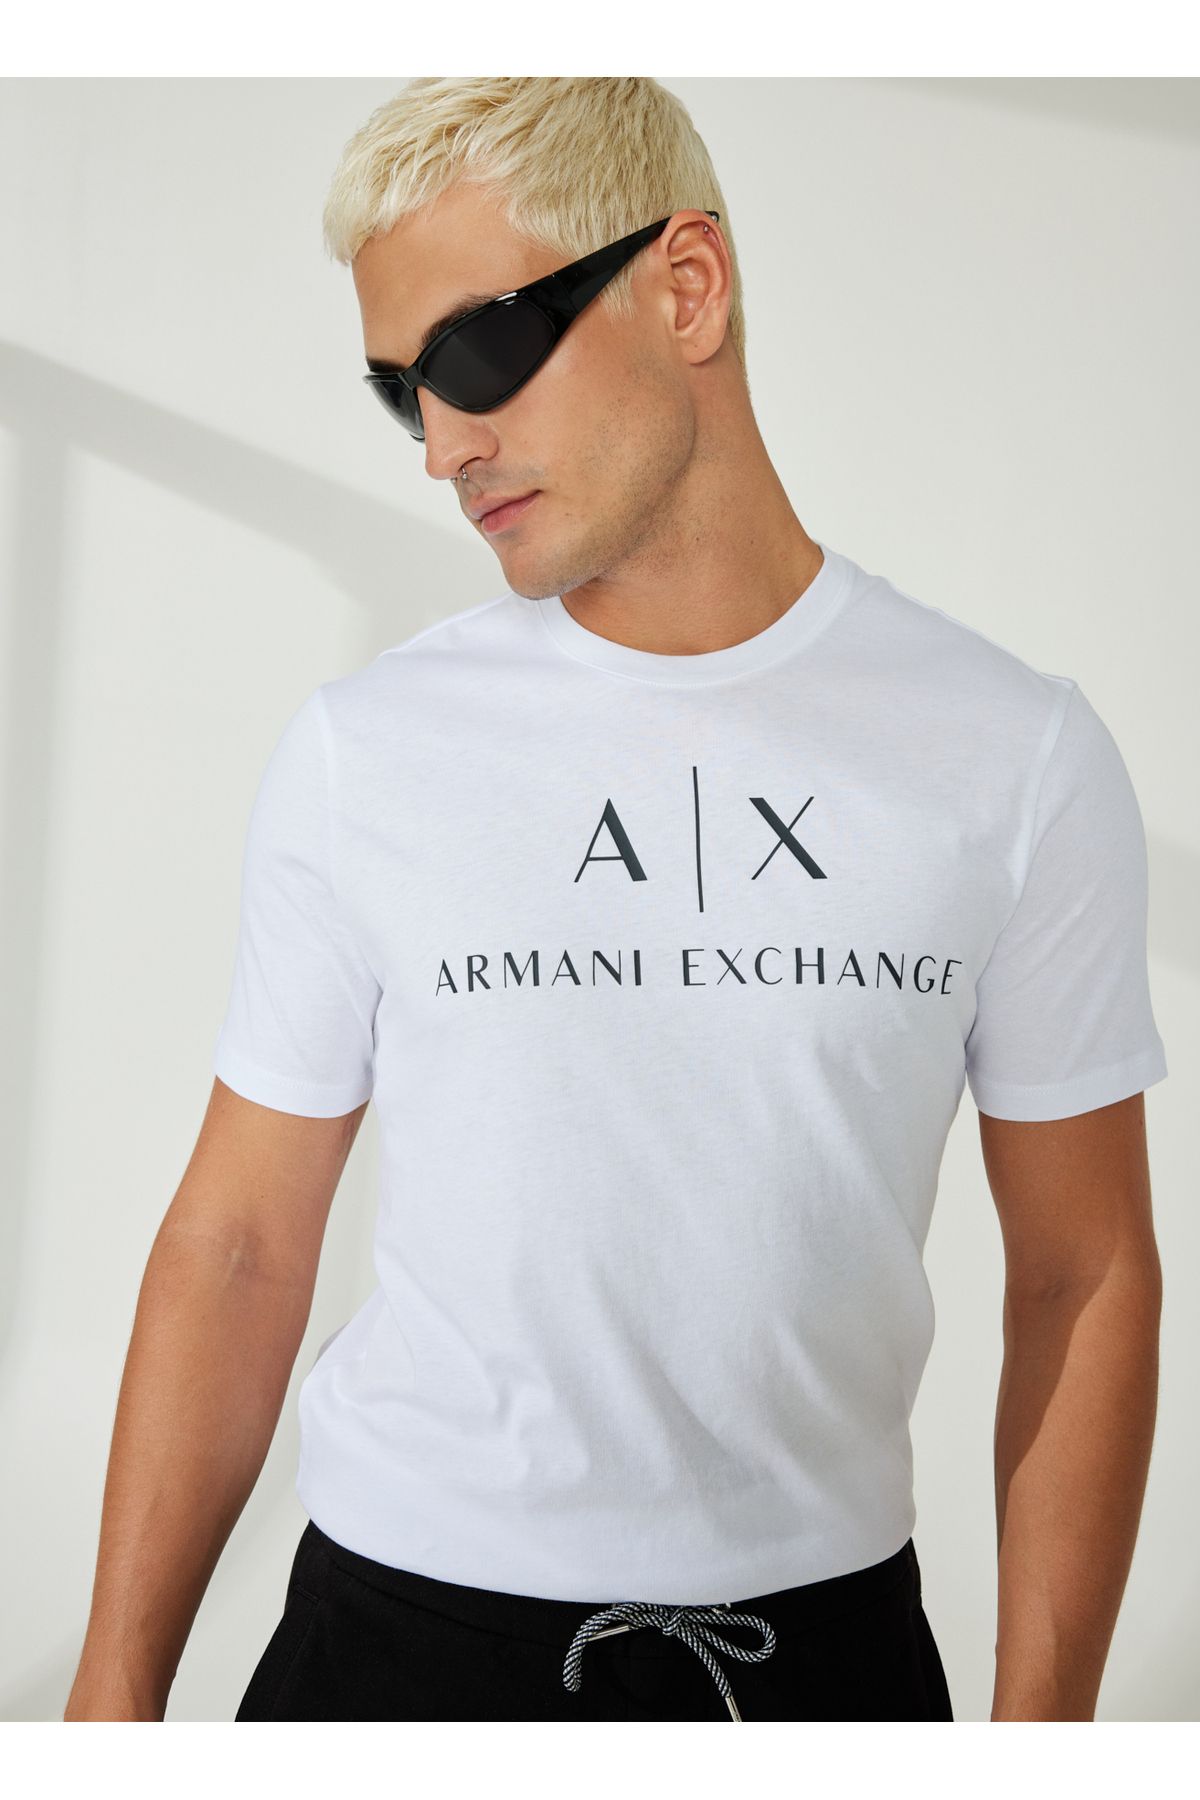 Armani Exchange Bisiklet Yaka Düz Beyaz Erkek T-shirt 8nztcj 1100-whıte